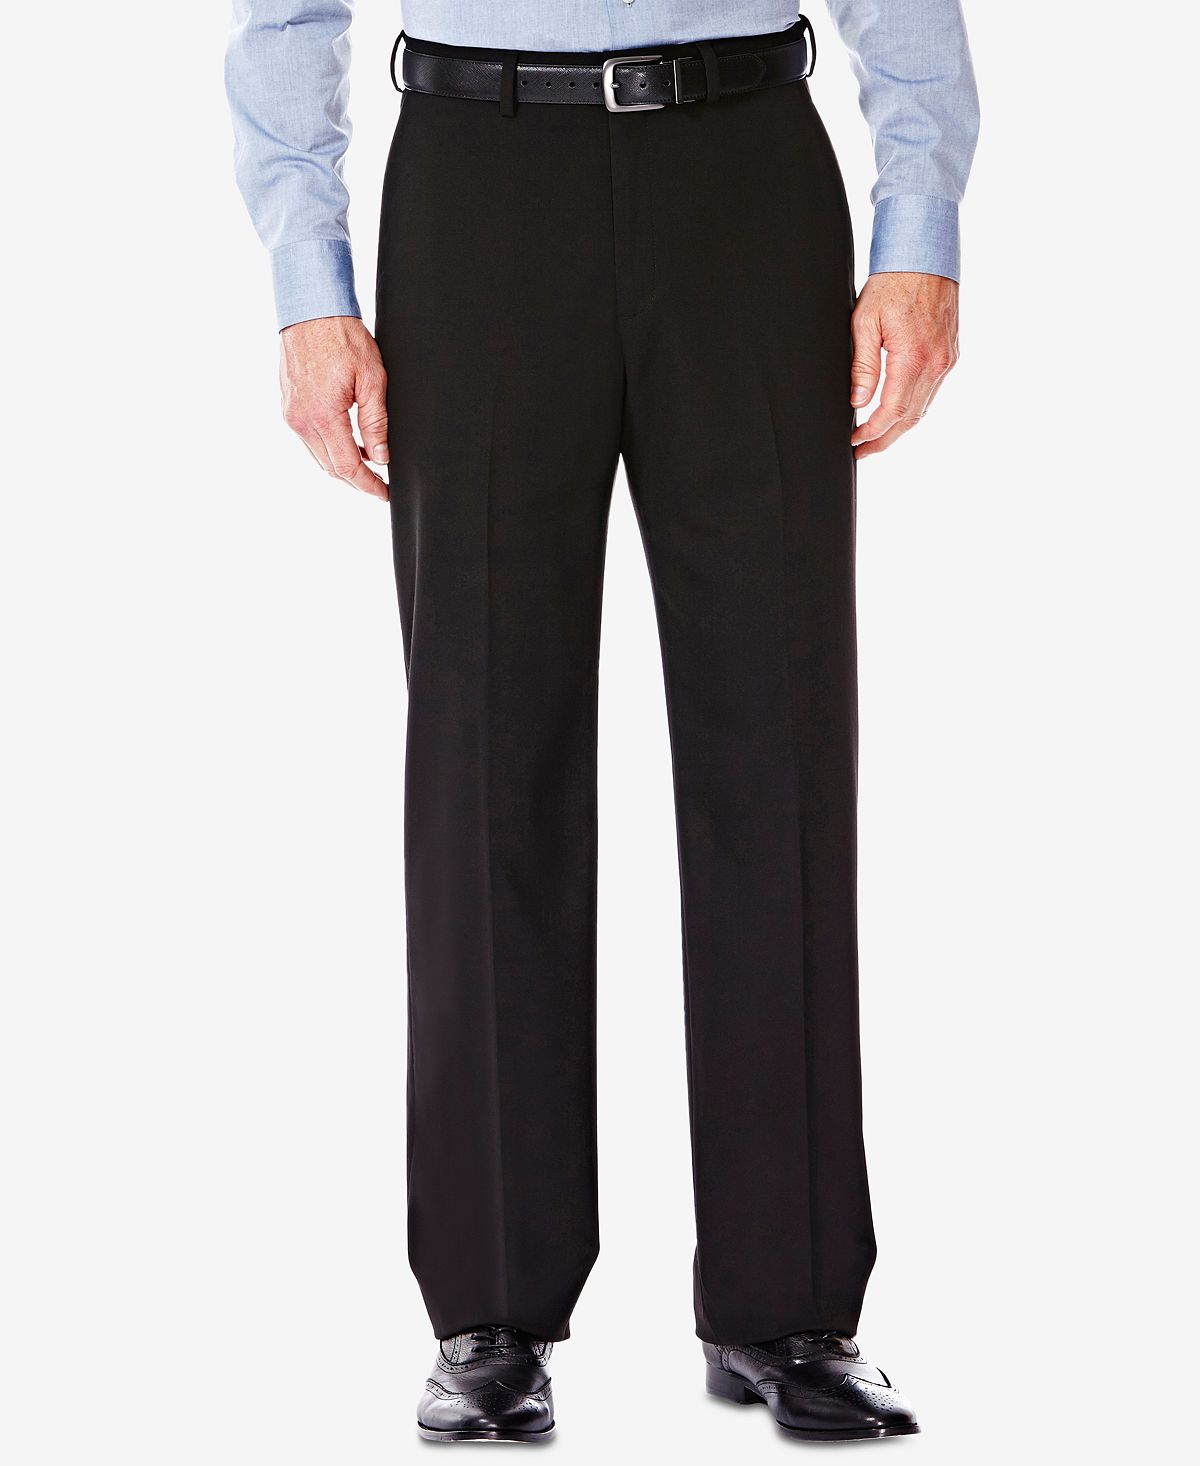 Haggar J.m. Men’s Classic/ Regular Fit Stretch Sharkskin Suit Pants Black